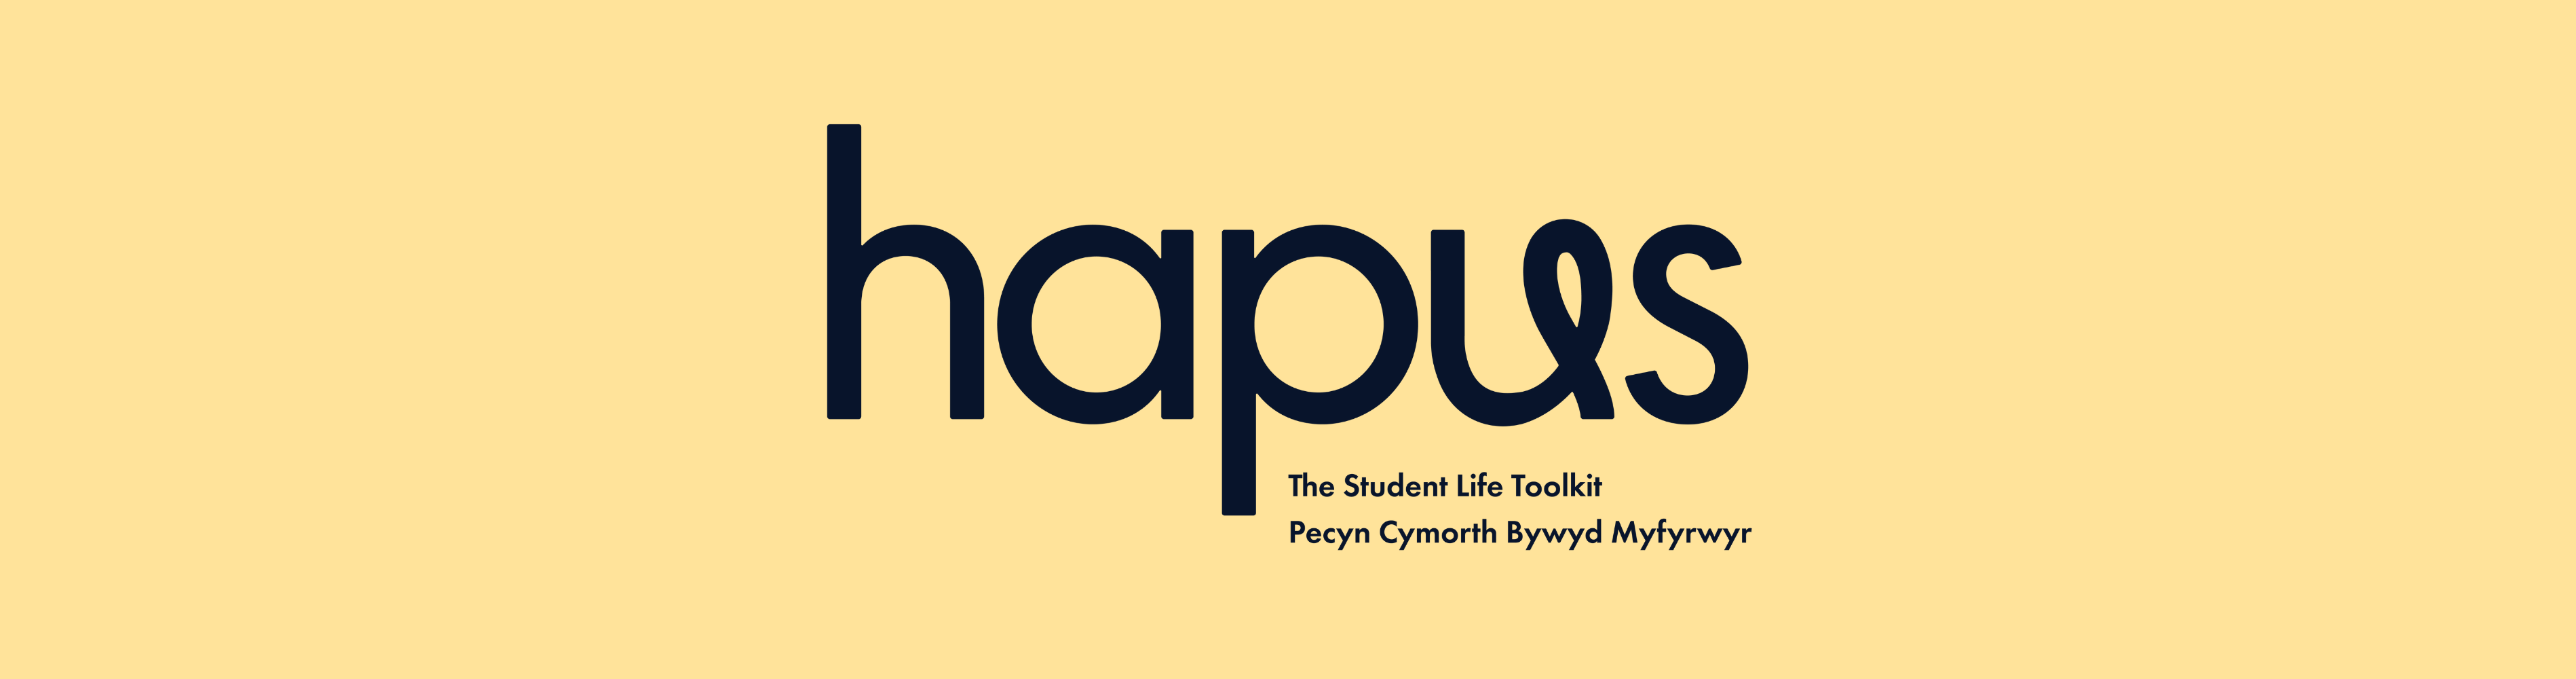 Hapus - The Student Life Toolkit